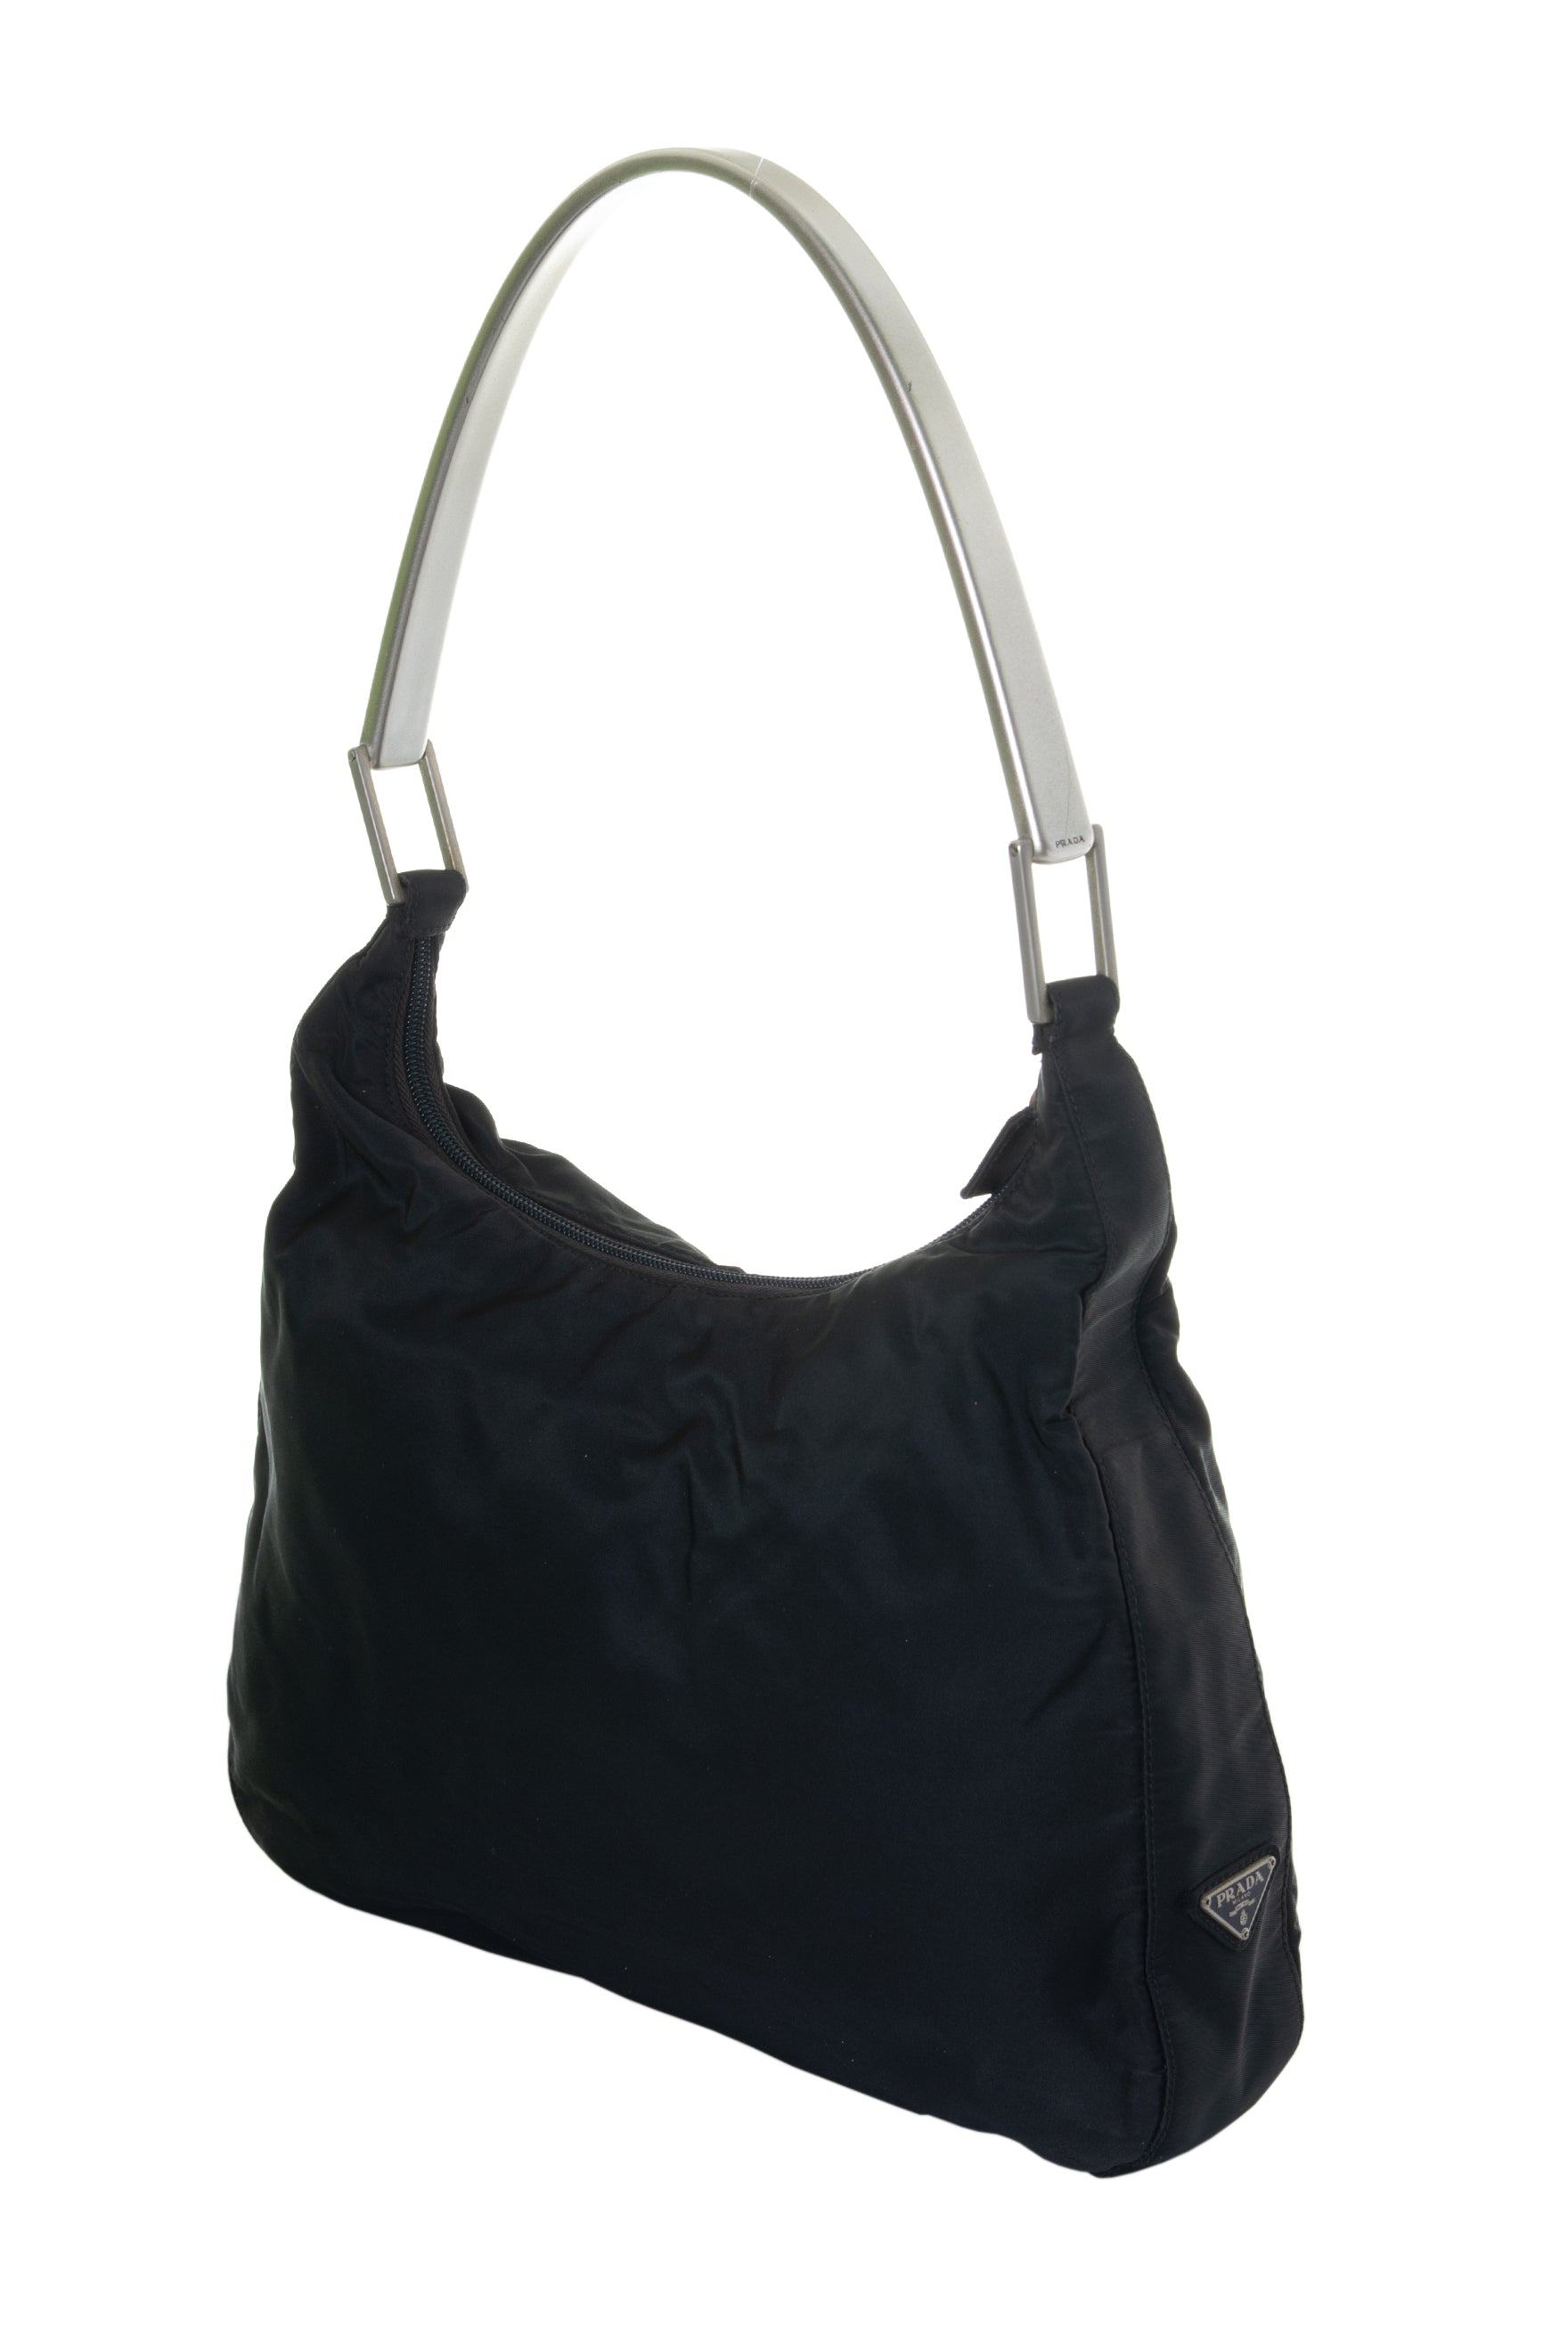 Prada Vintage Metal Handle Bag - Black Shoulder Bags, Handbags